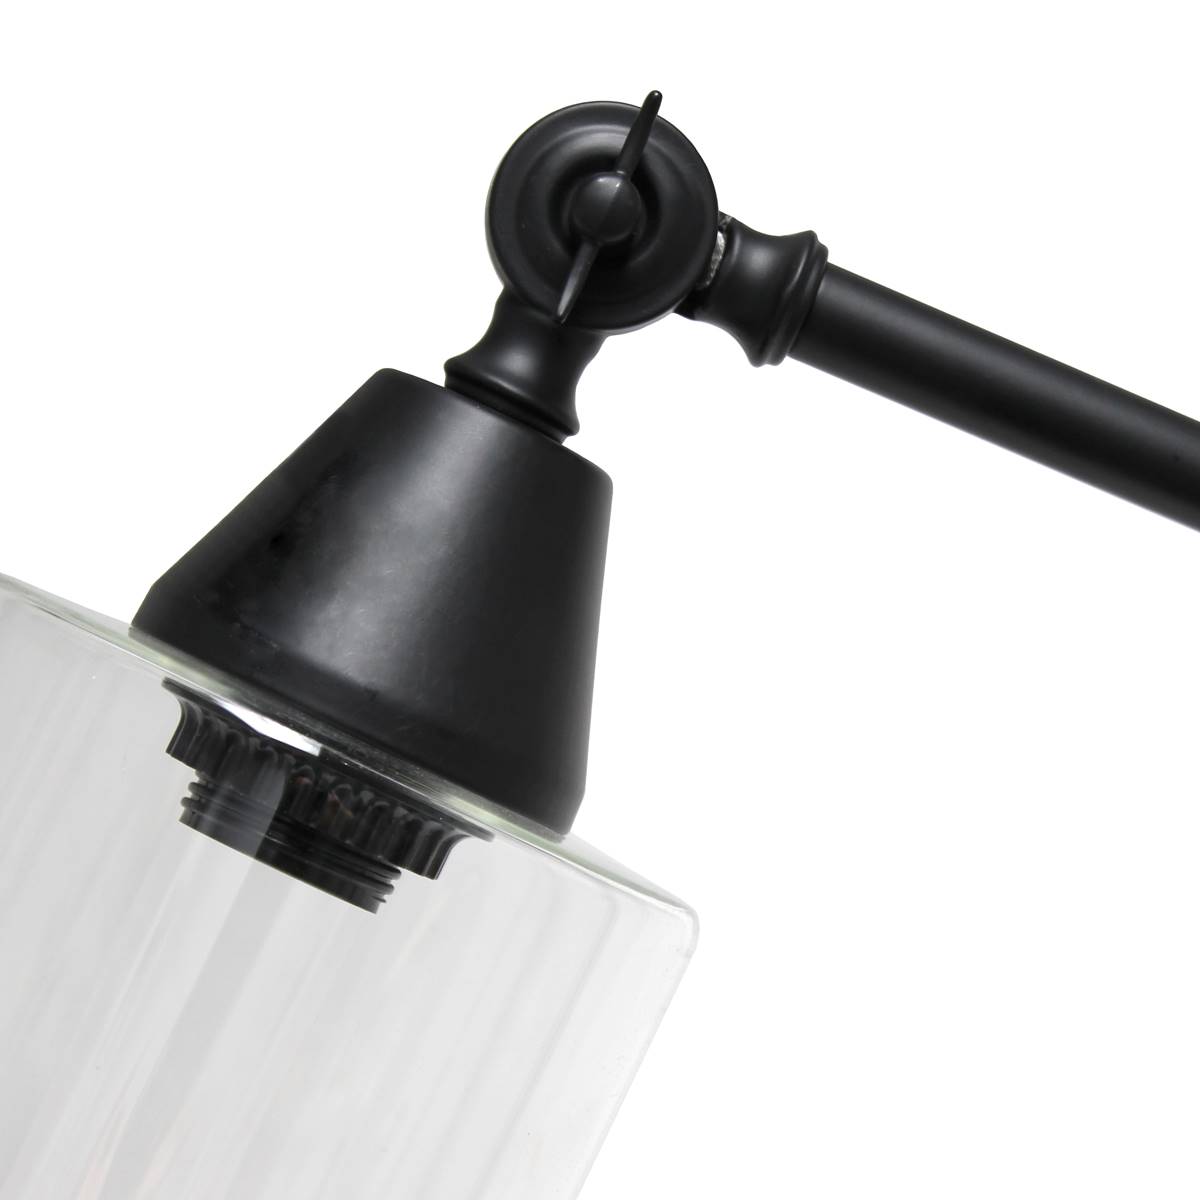 Lalia Home Studio Matte Finish Loft Vertical Adjustable Desk Lamp